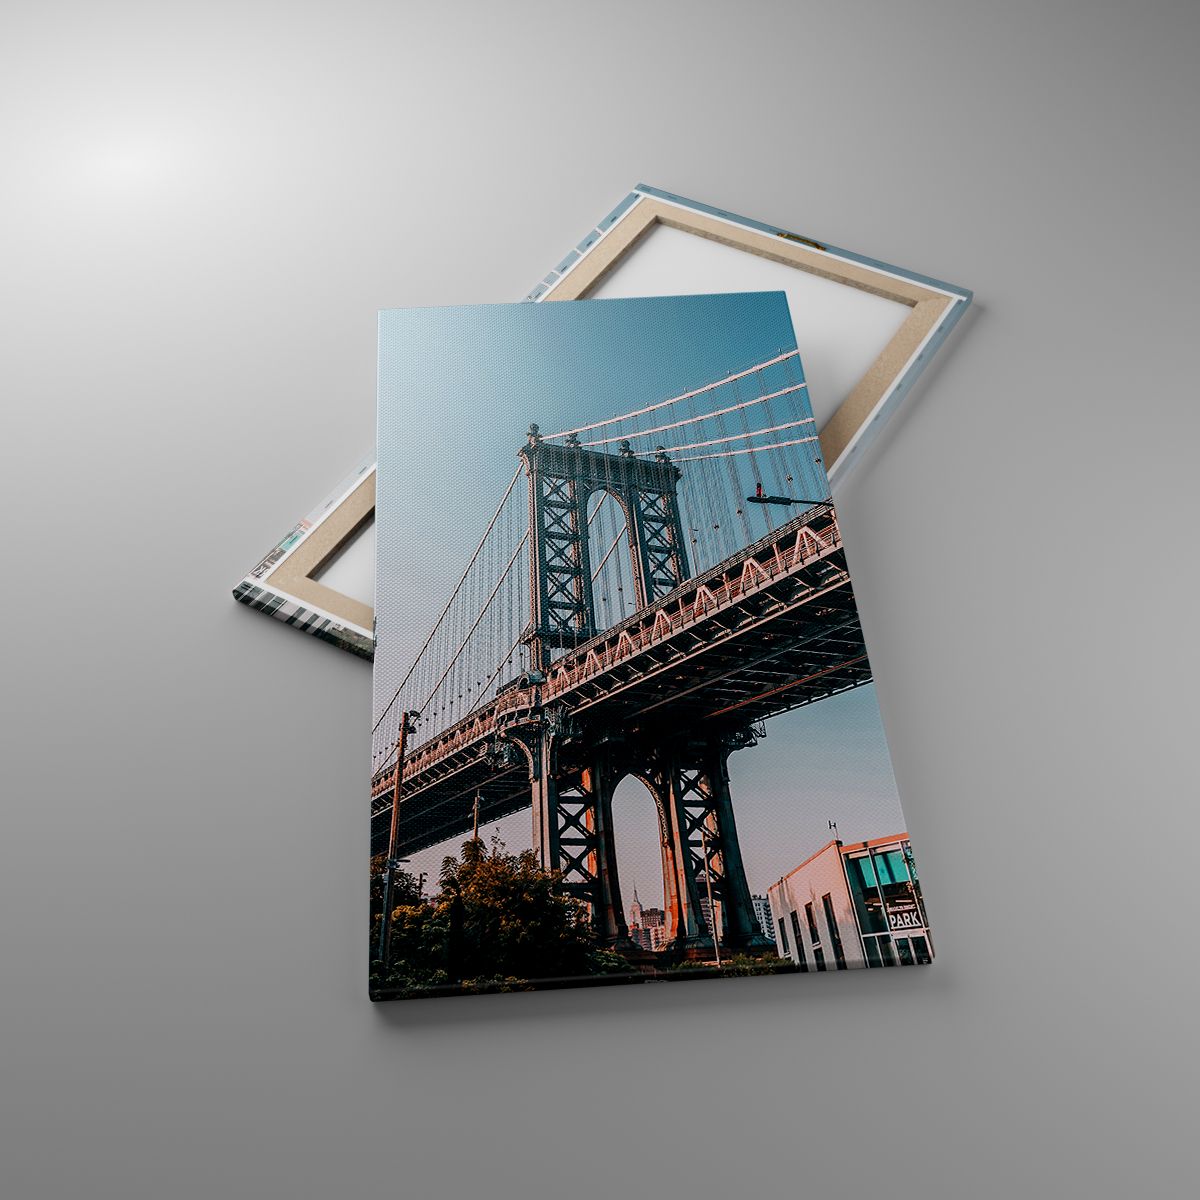 Quadri New York, Quadri Ponte Di Brooklyn, Quadri Architettura, Quadri Città, Quadri Viaggi